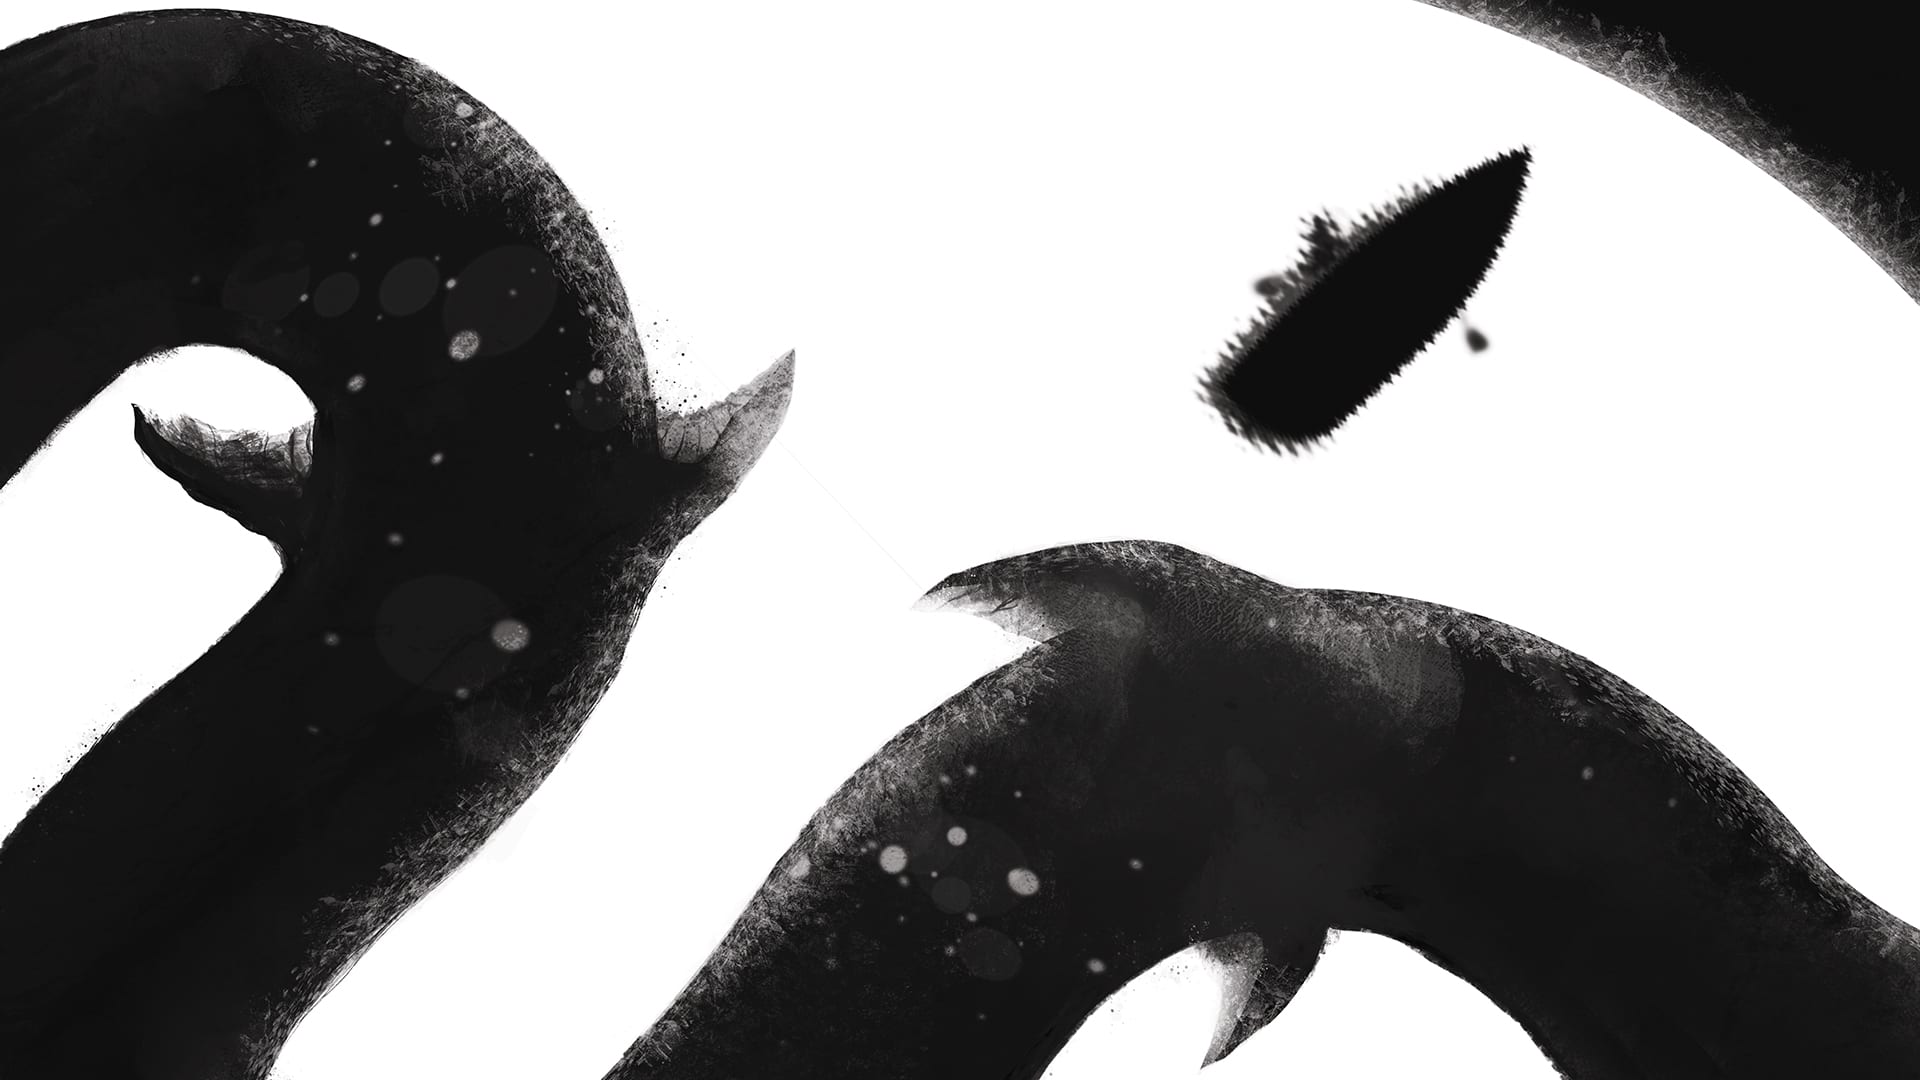 Full Album Artwork Design showing winding Sea Monster below a boat in water